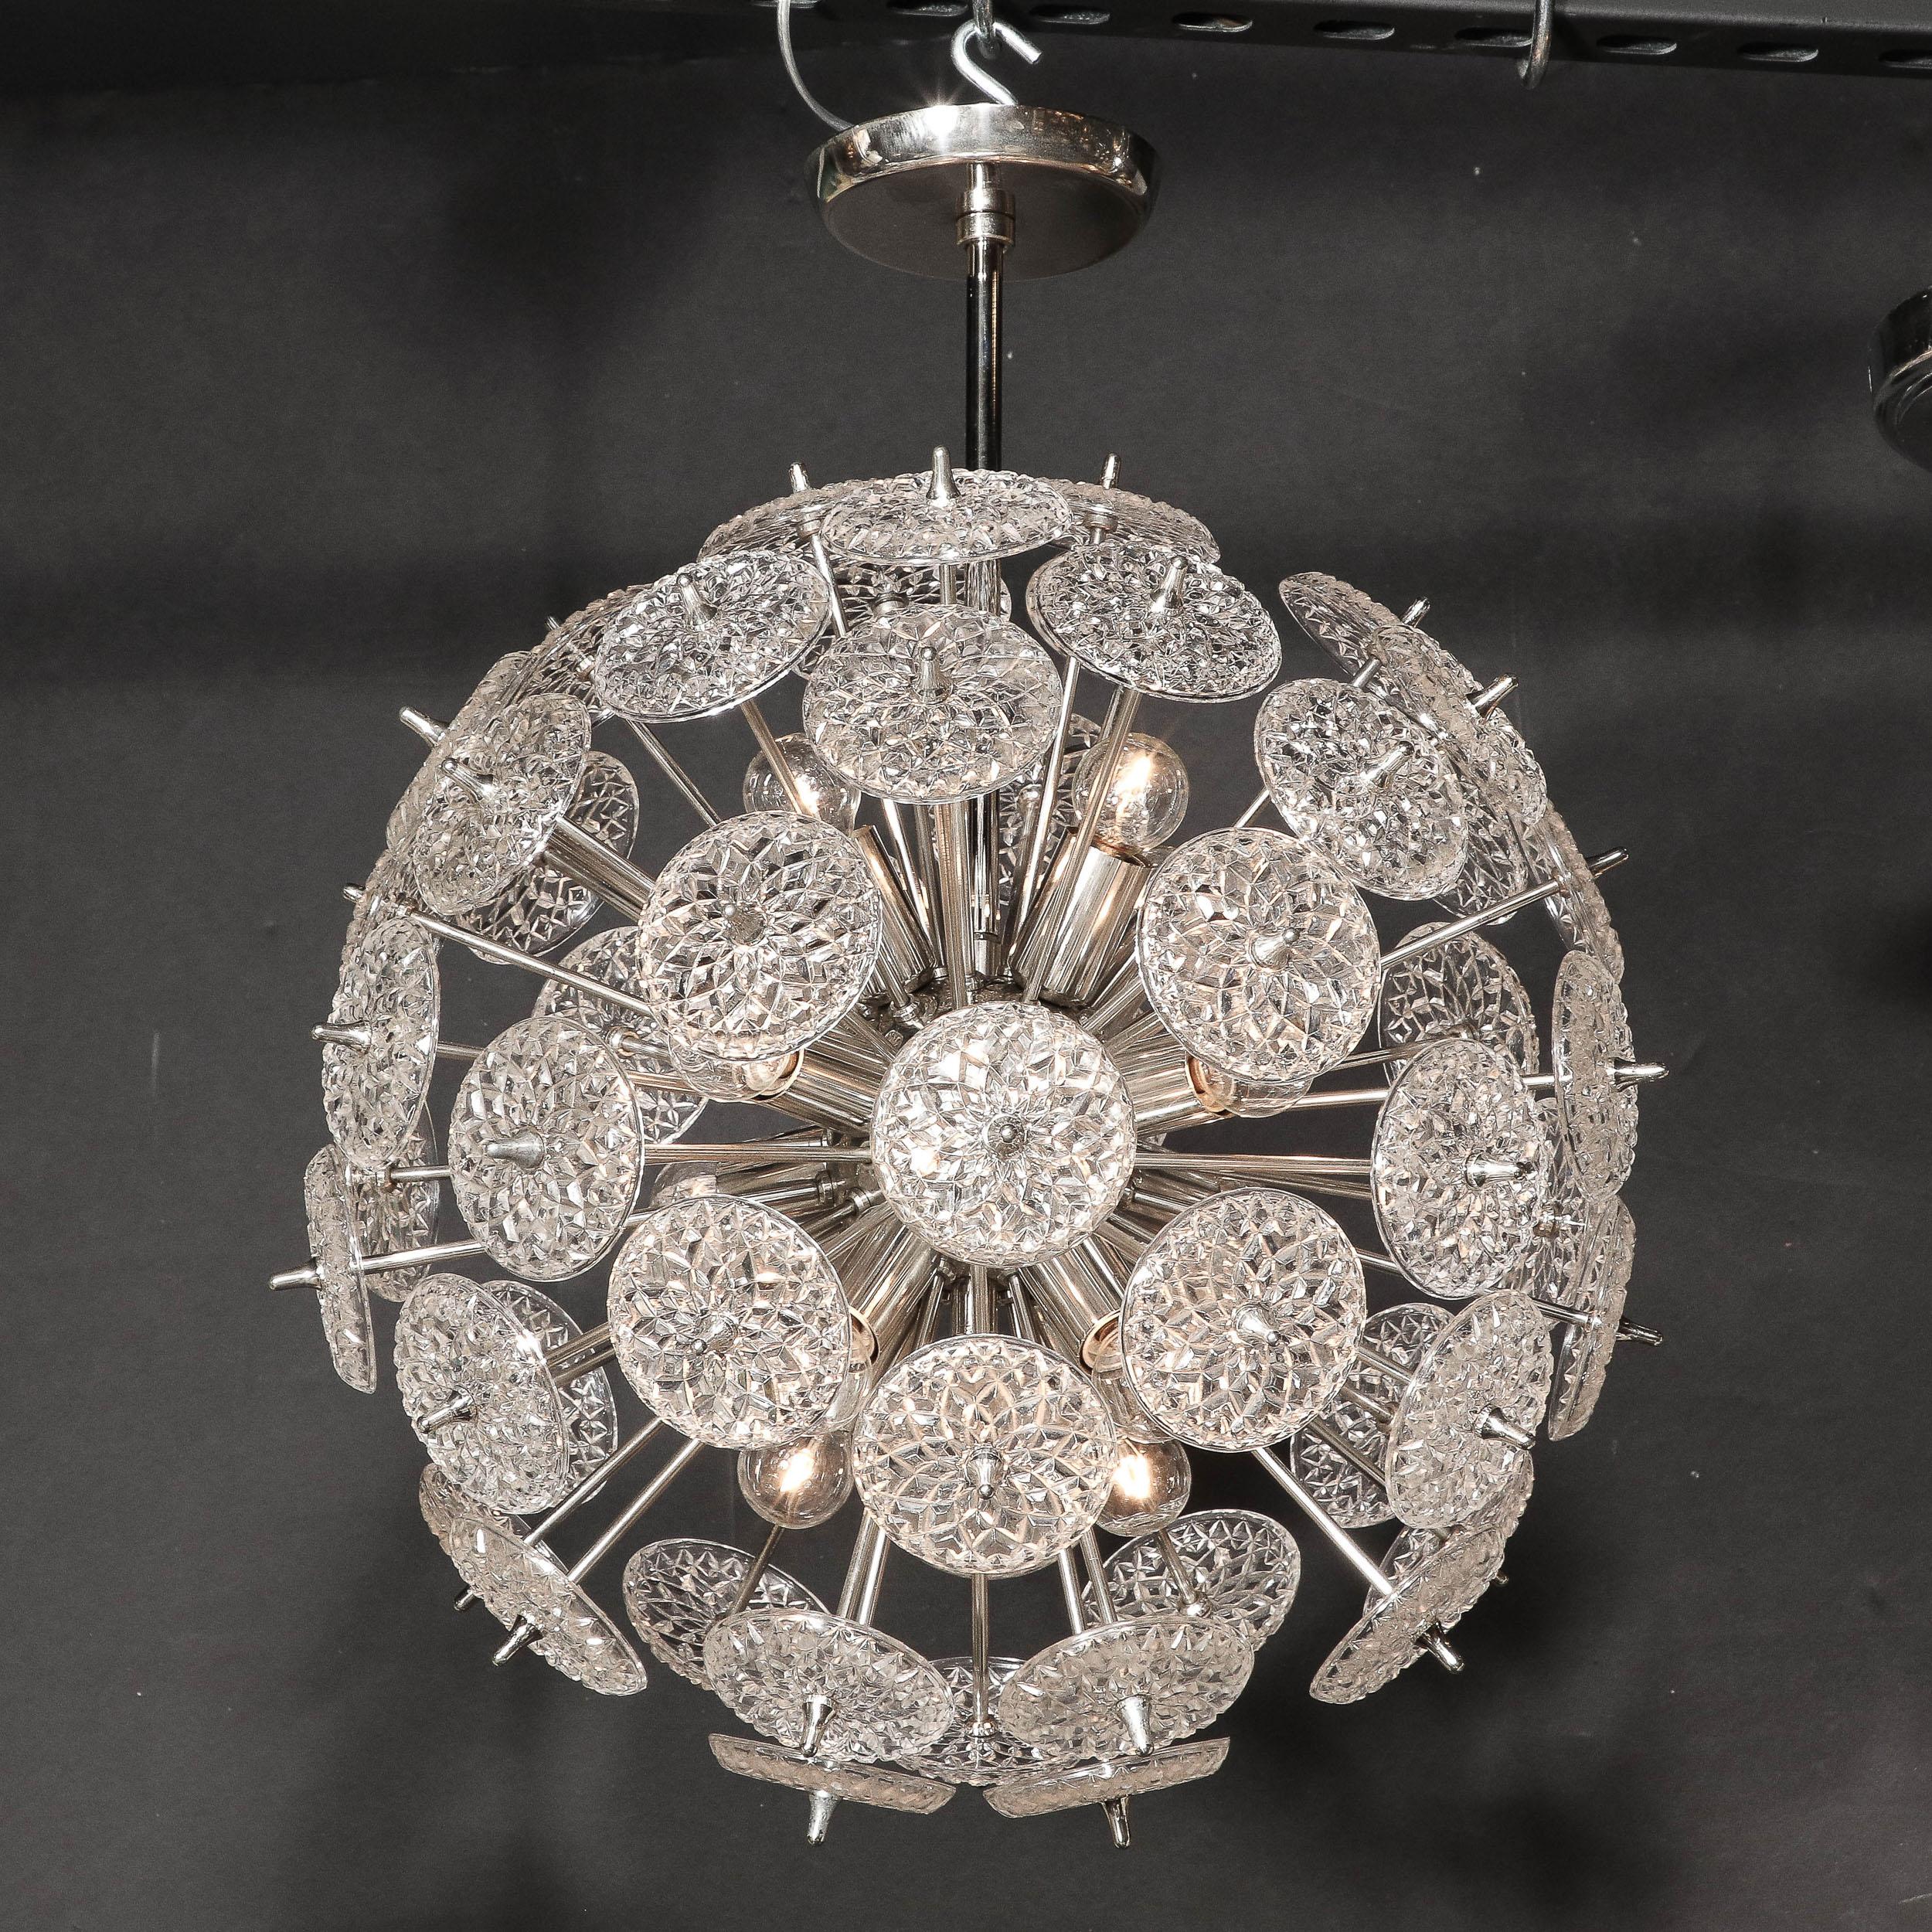 Austrian Mid-Century Modernist Pressed Glass Disc Sputnik Chandelier w/ Nickel Fittings For Sale